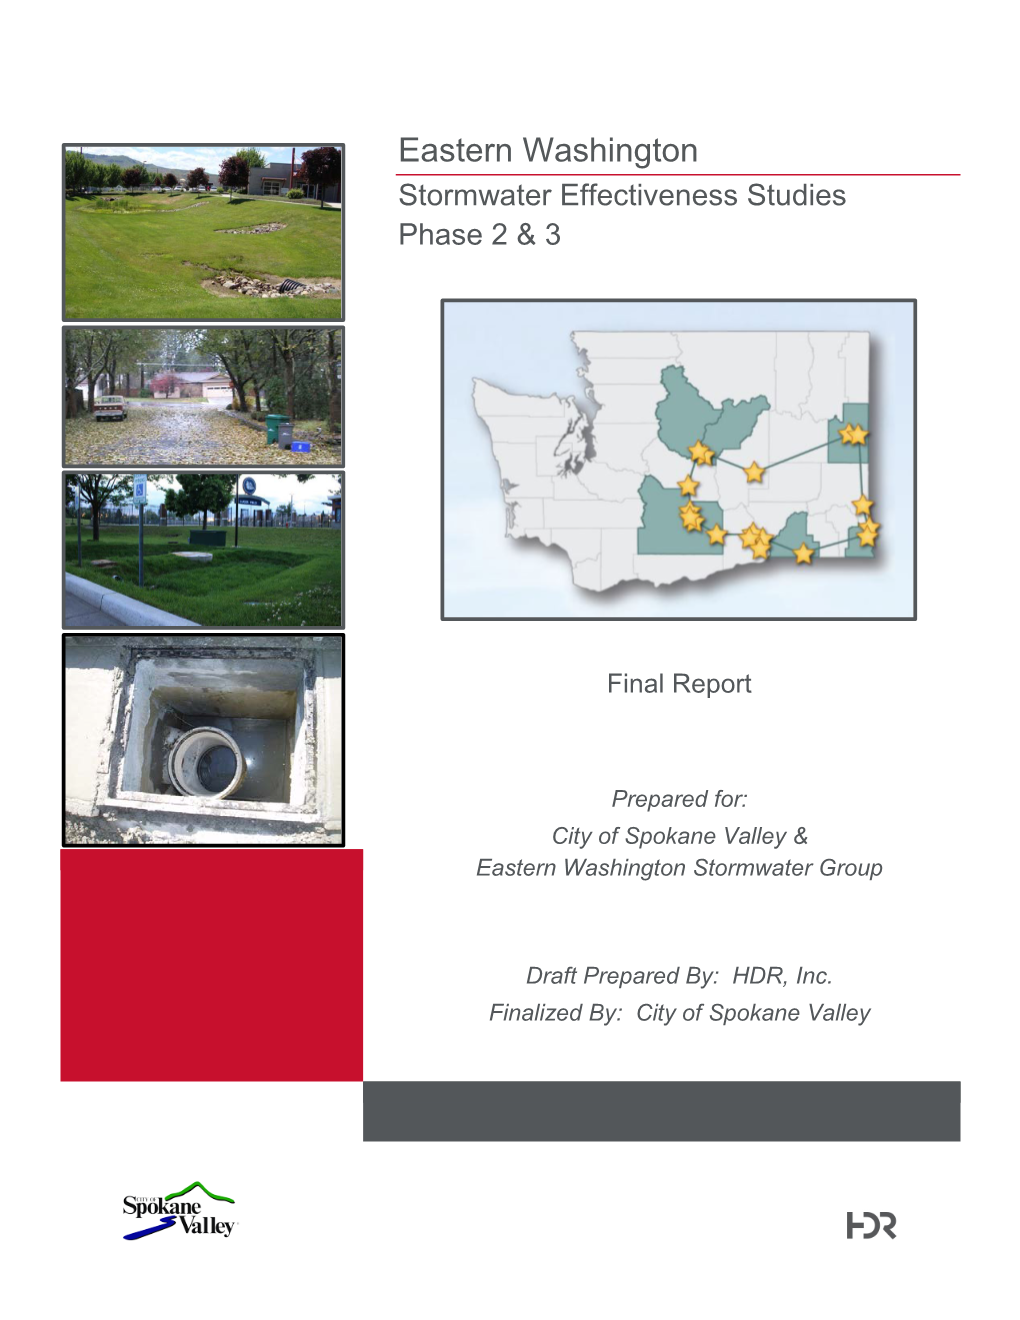 Eastern Washington Stormwater Effectiveness Studies Phase 2 & 3